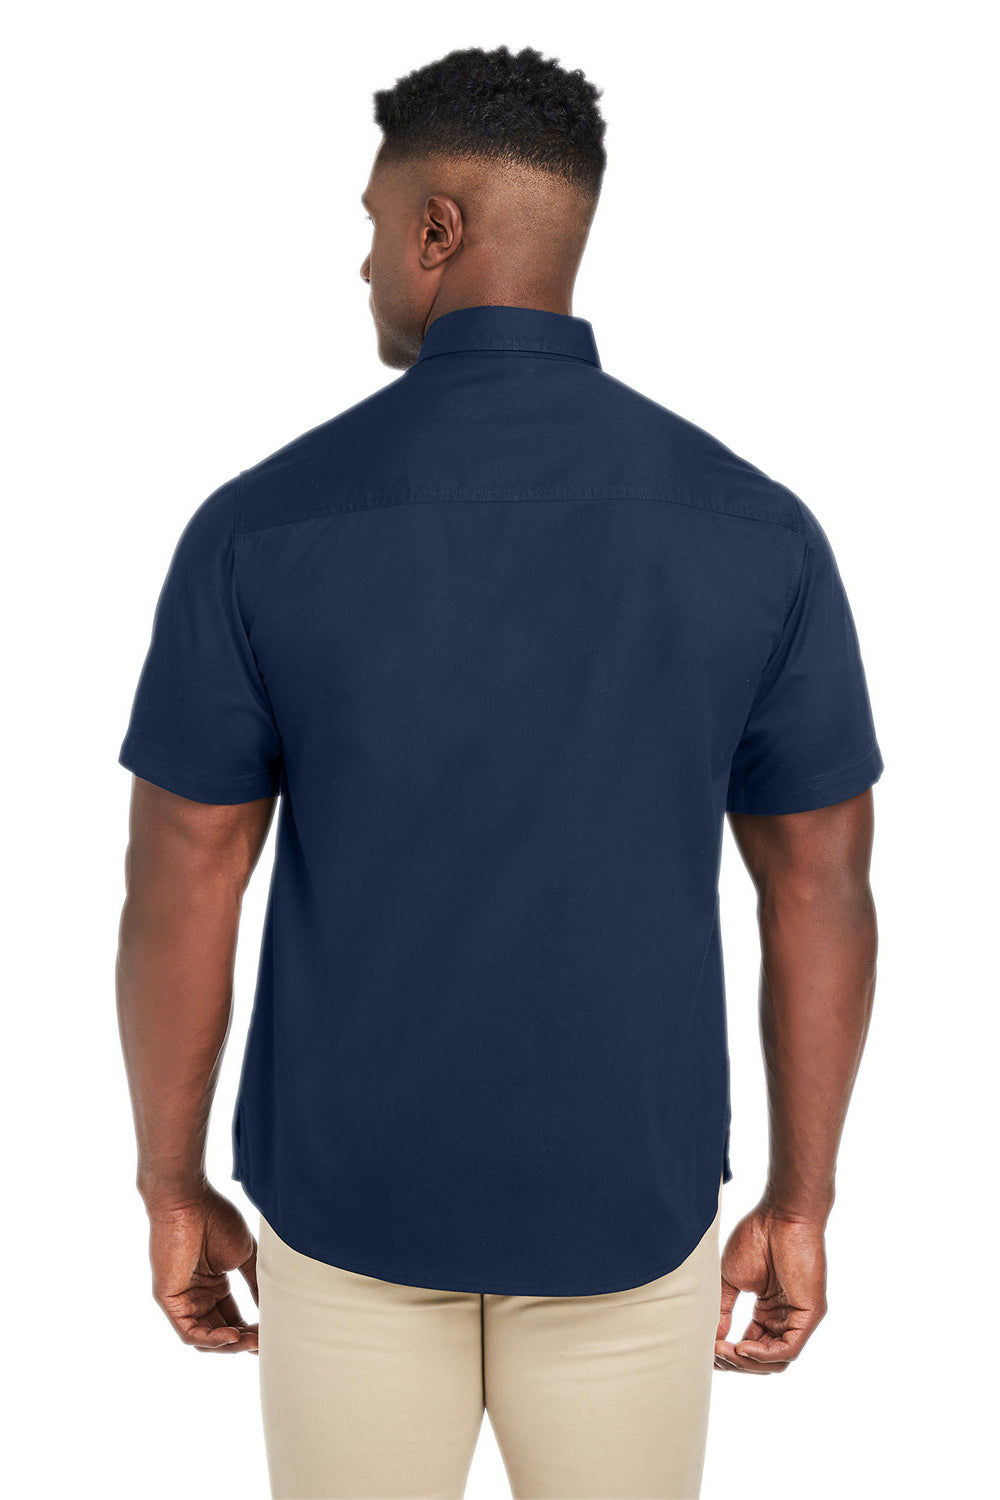 Harriton M585 Mens Advantage Short Sleeve Button Down Shirt w/ Double Pockets Dark Navy Blue Back